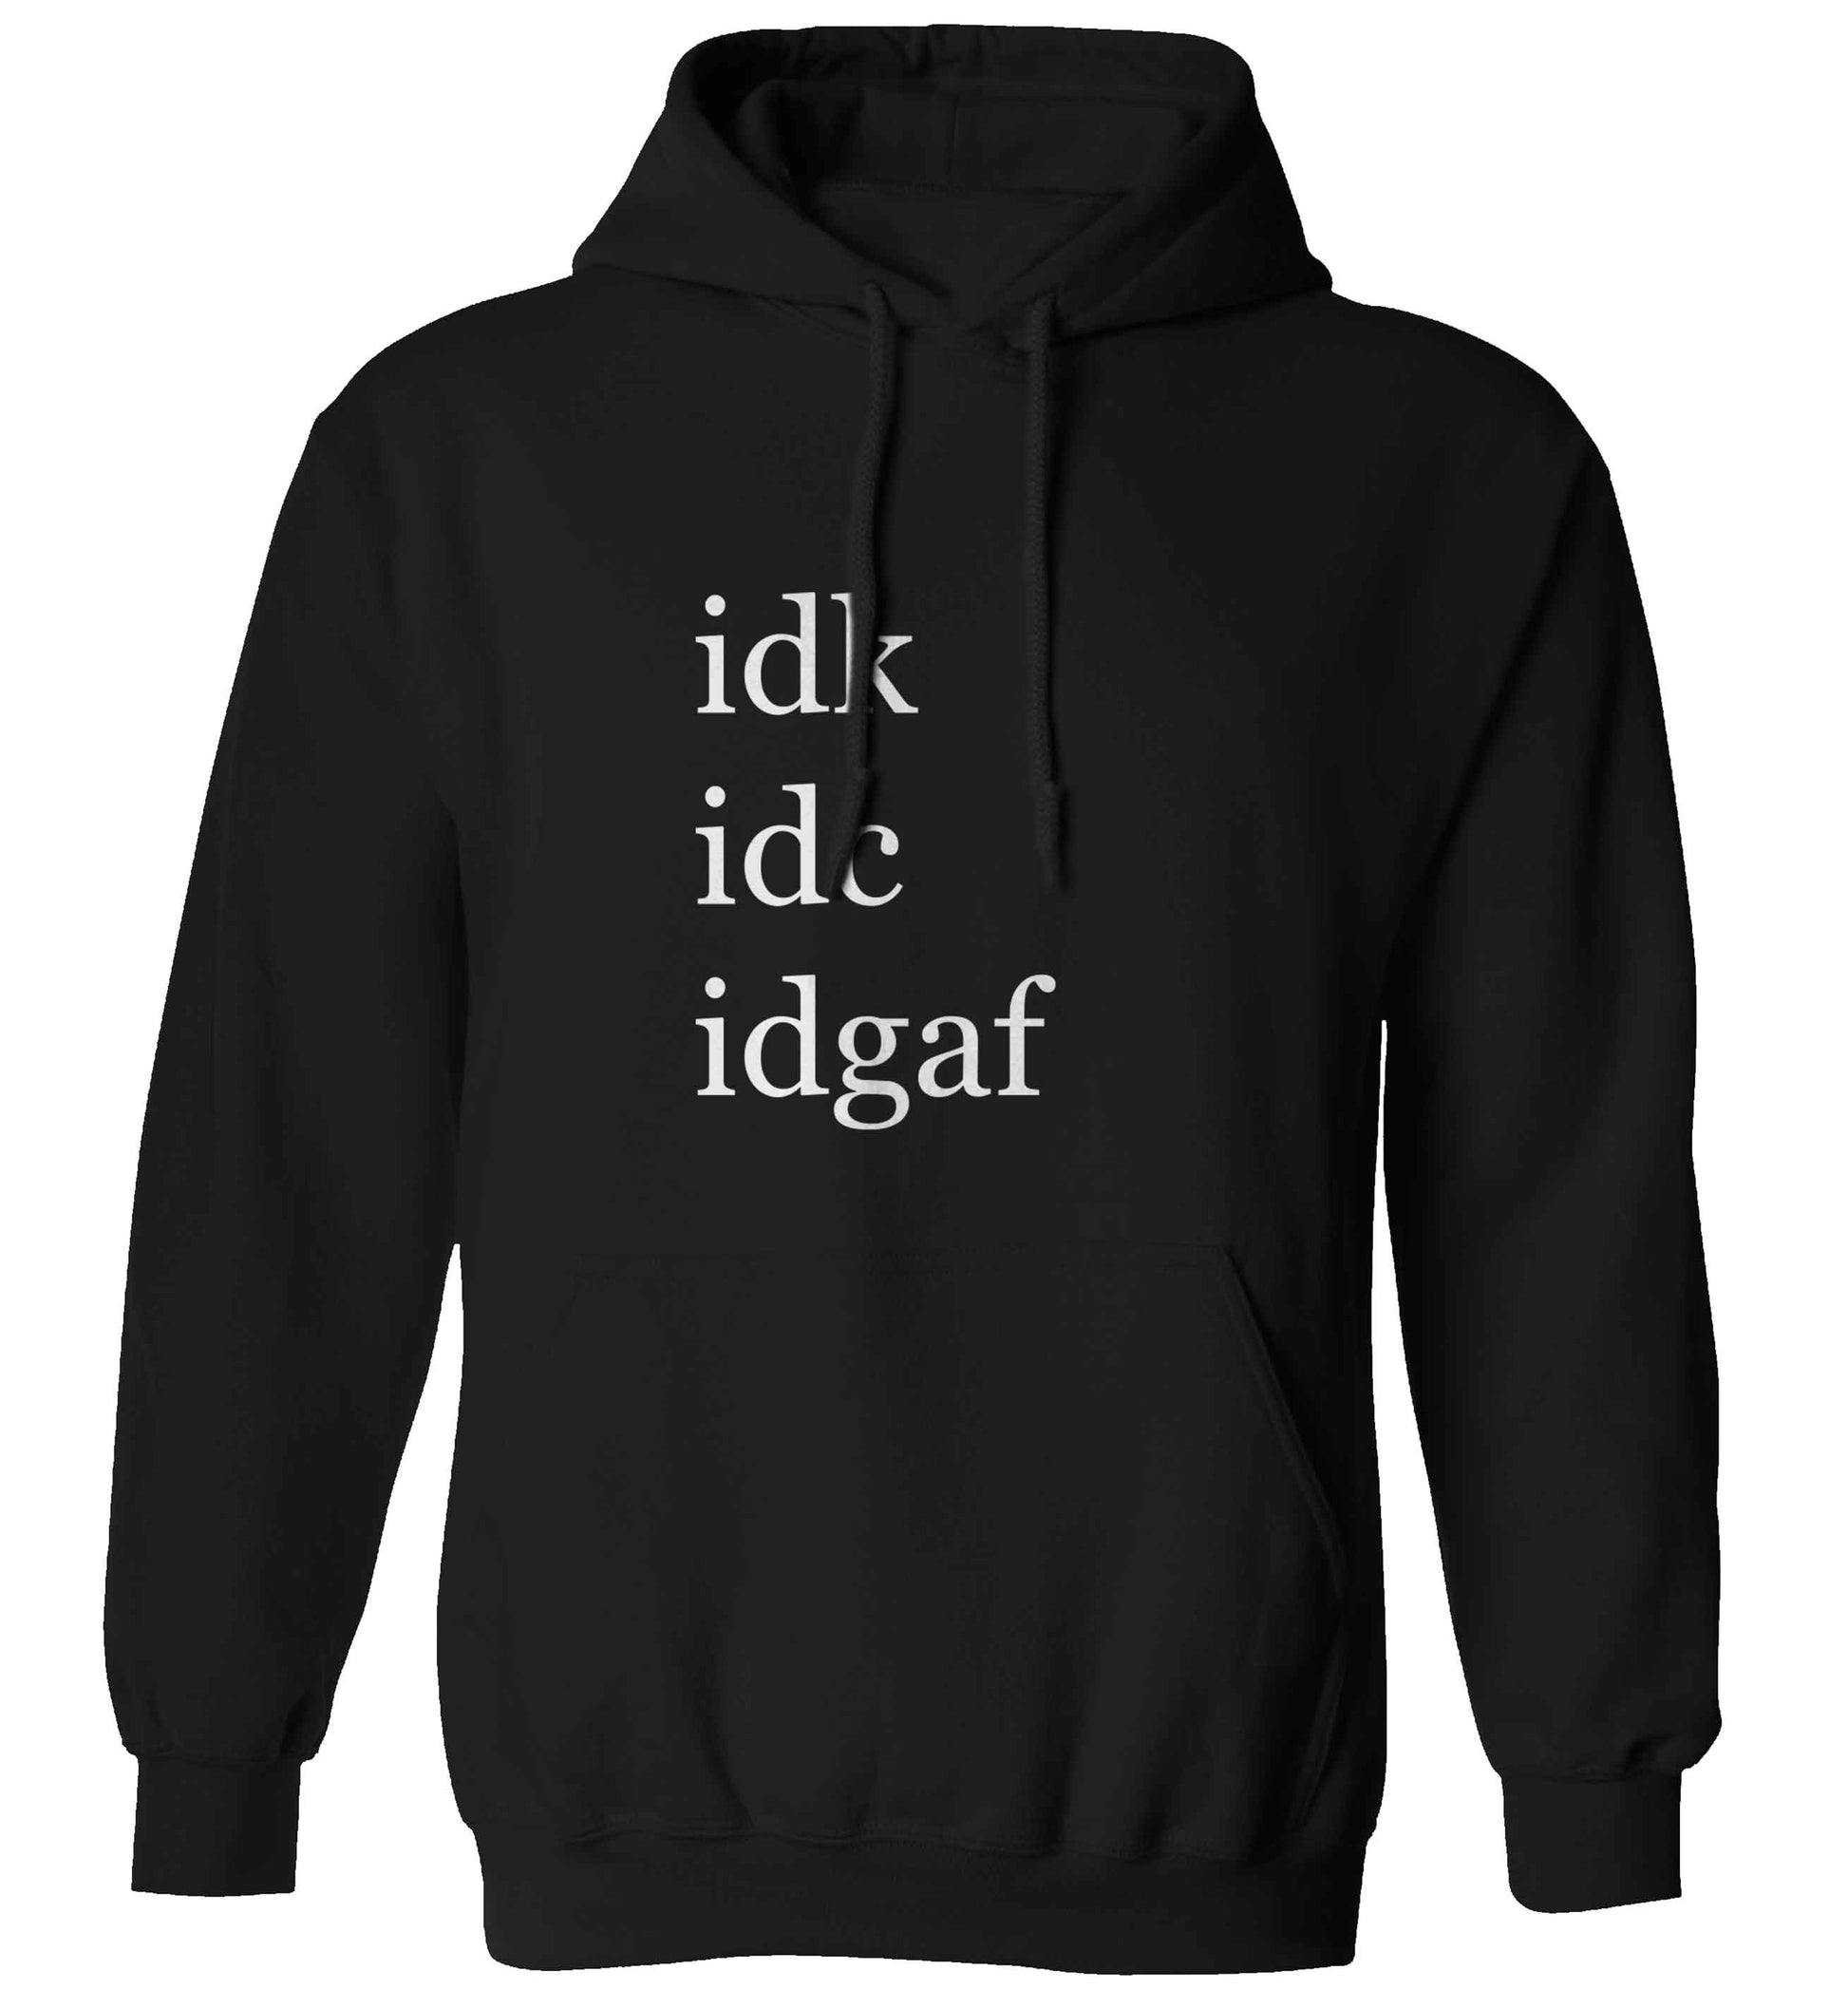 Idk Idc Idgaf adults unisex black hoodie 2XL